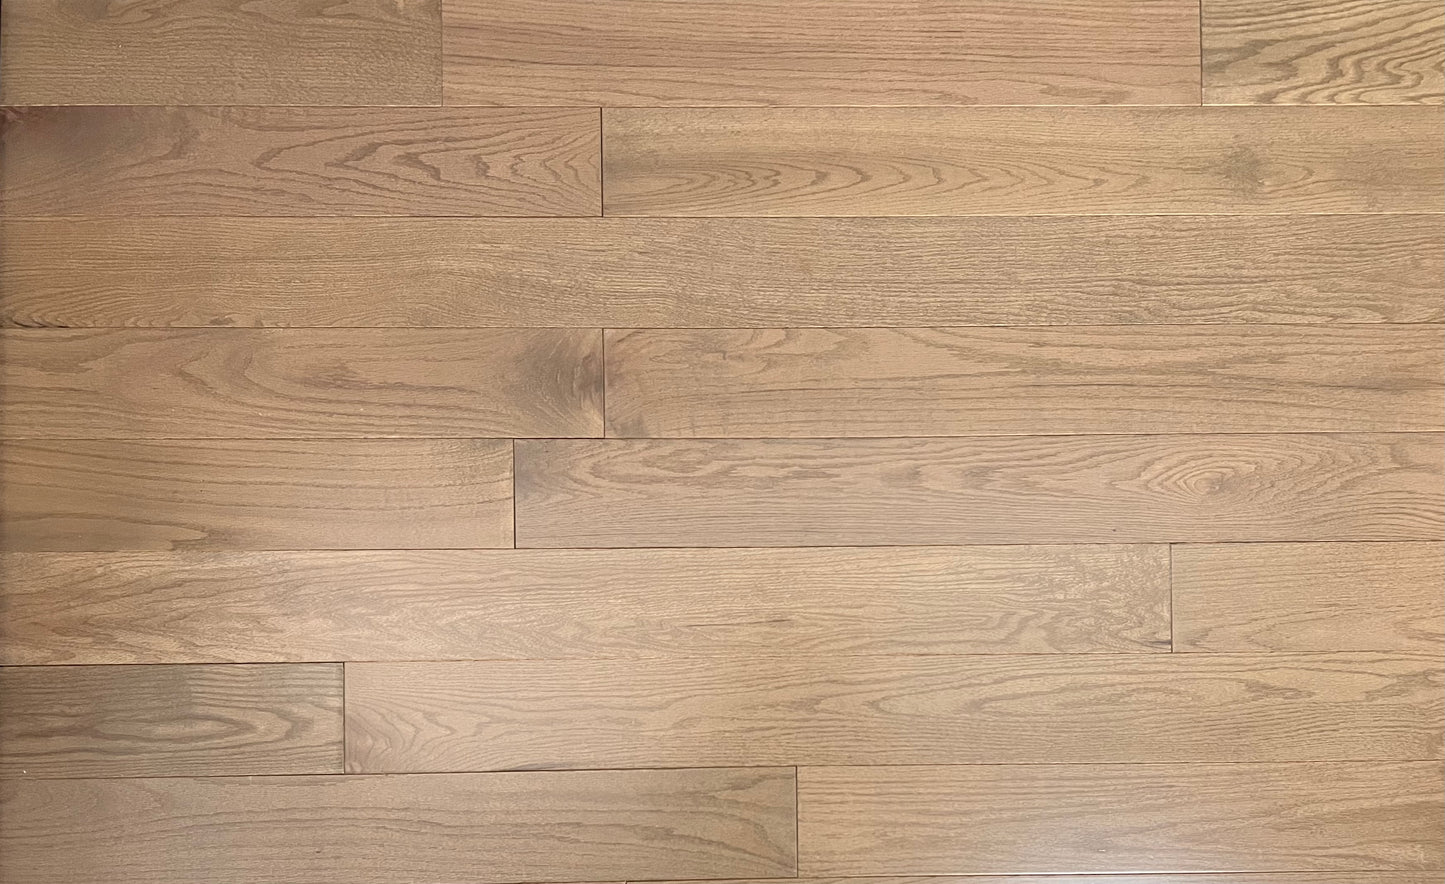 5" x 3/4" Solid Red Oak Cocoa Hardwood Flooring